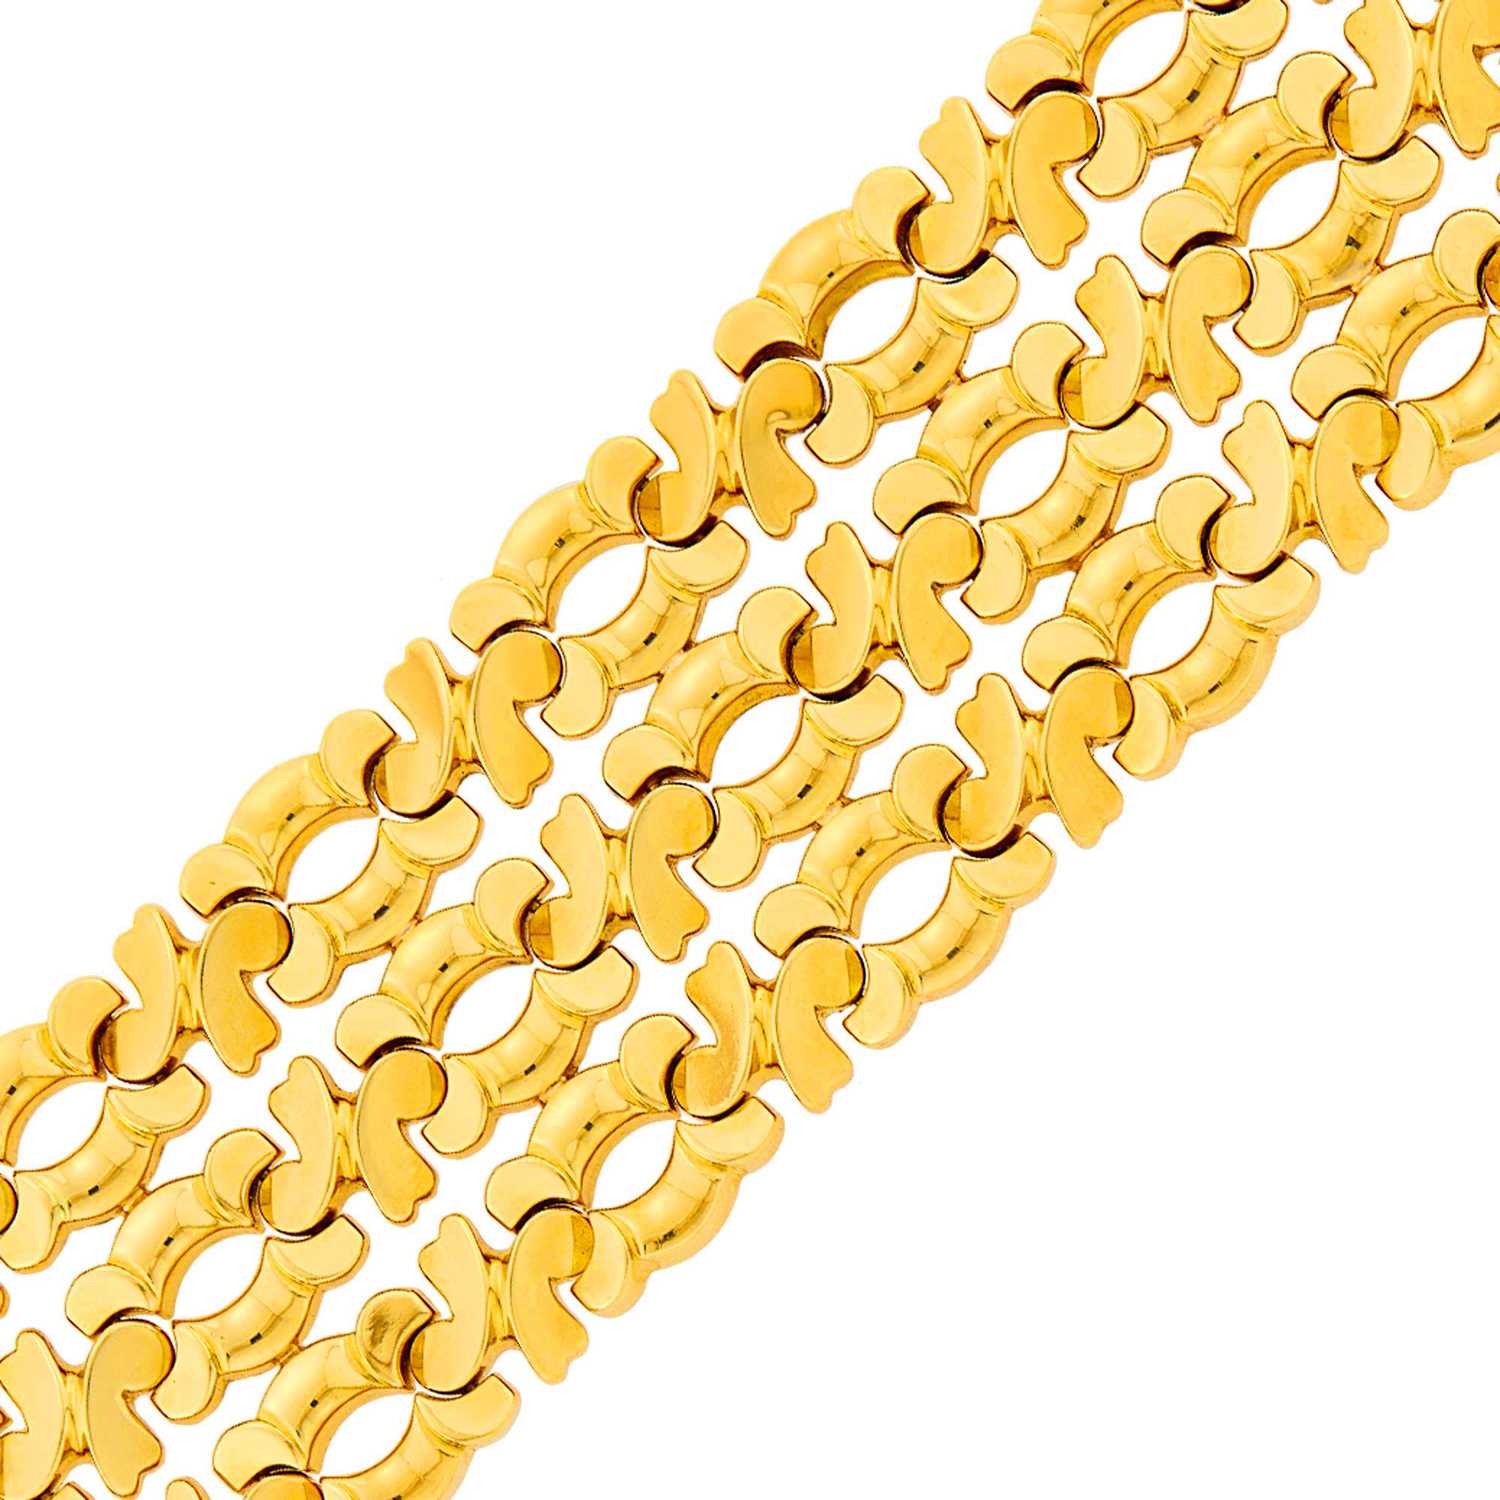 Lot 90 - Bucherer Wide Gold Bracelet